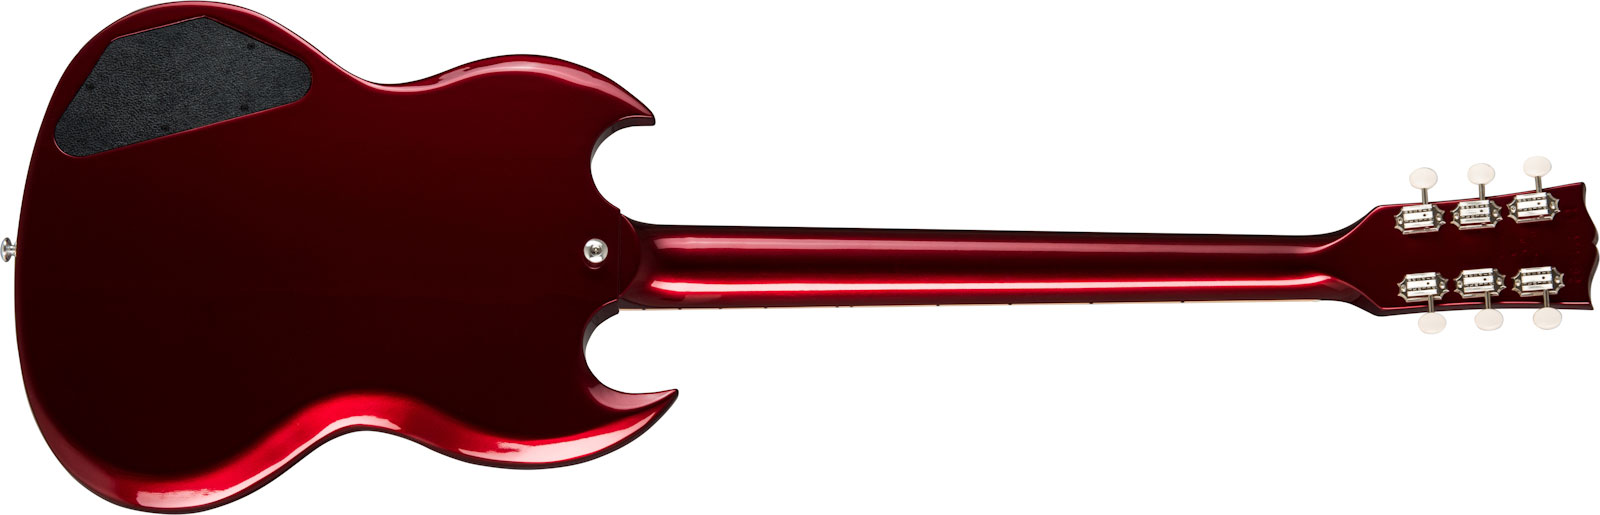 Gibson Sp Special Original 2p90 Ht Rw - Vintage Sparkling Burgundy - Retro rock electric guitar - Variation 1